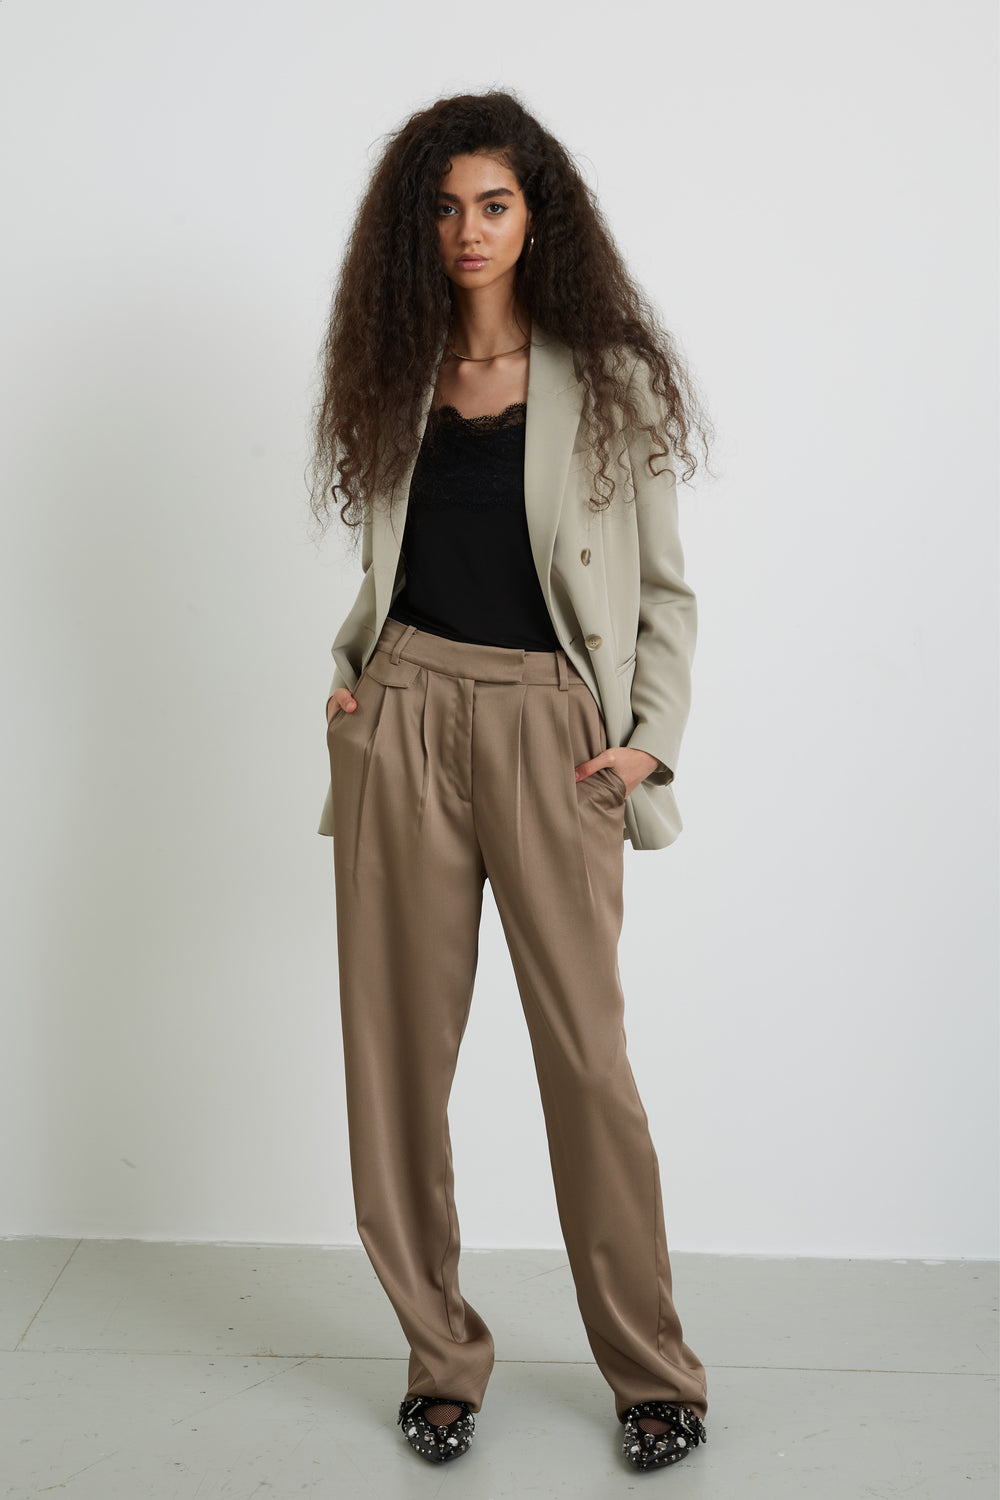 Bruuns Bazaar Women CedarsBBCella pants Pants Roasted Grey Khaki